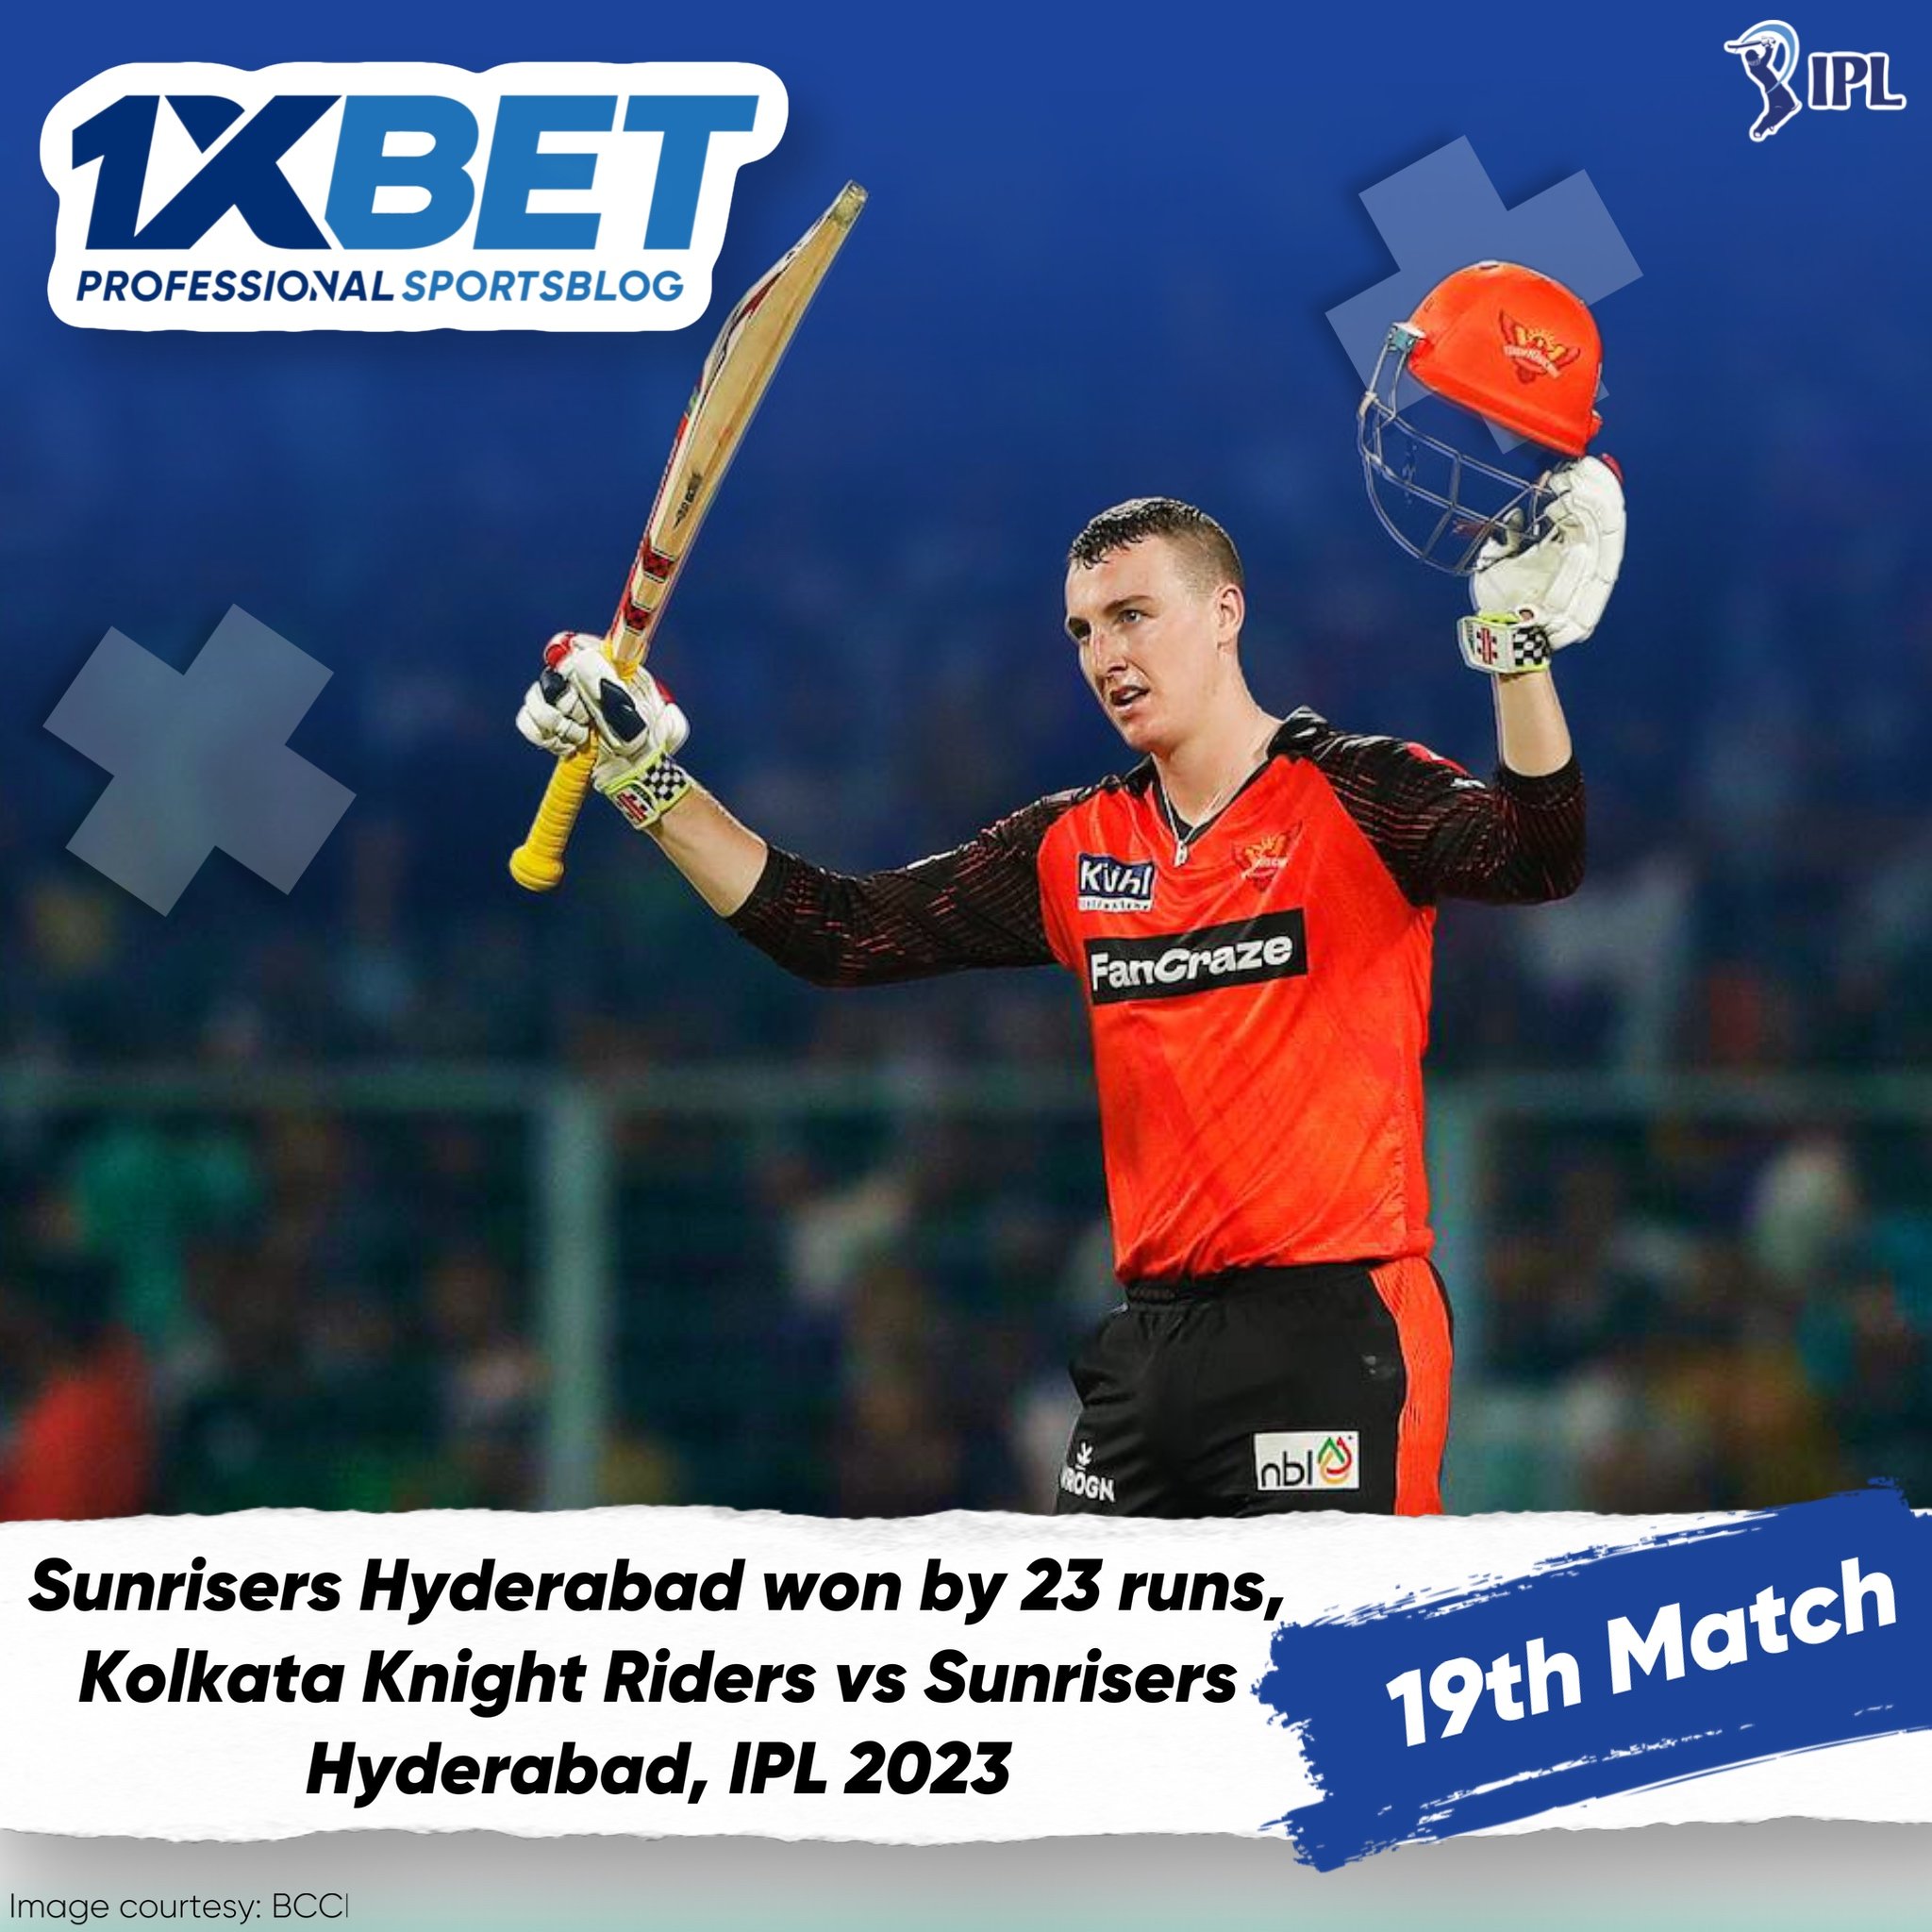 Sunrisers Hyderabad won by 23 runs